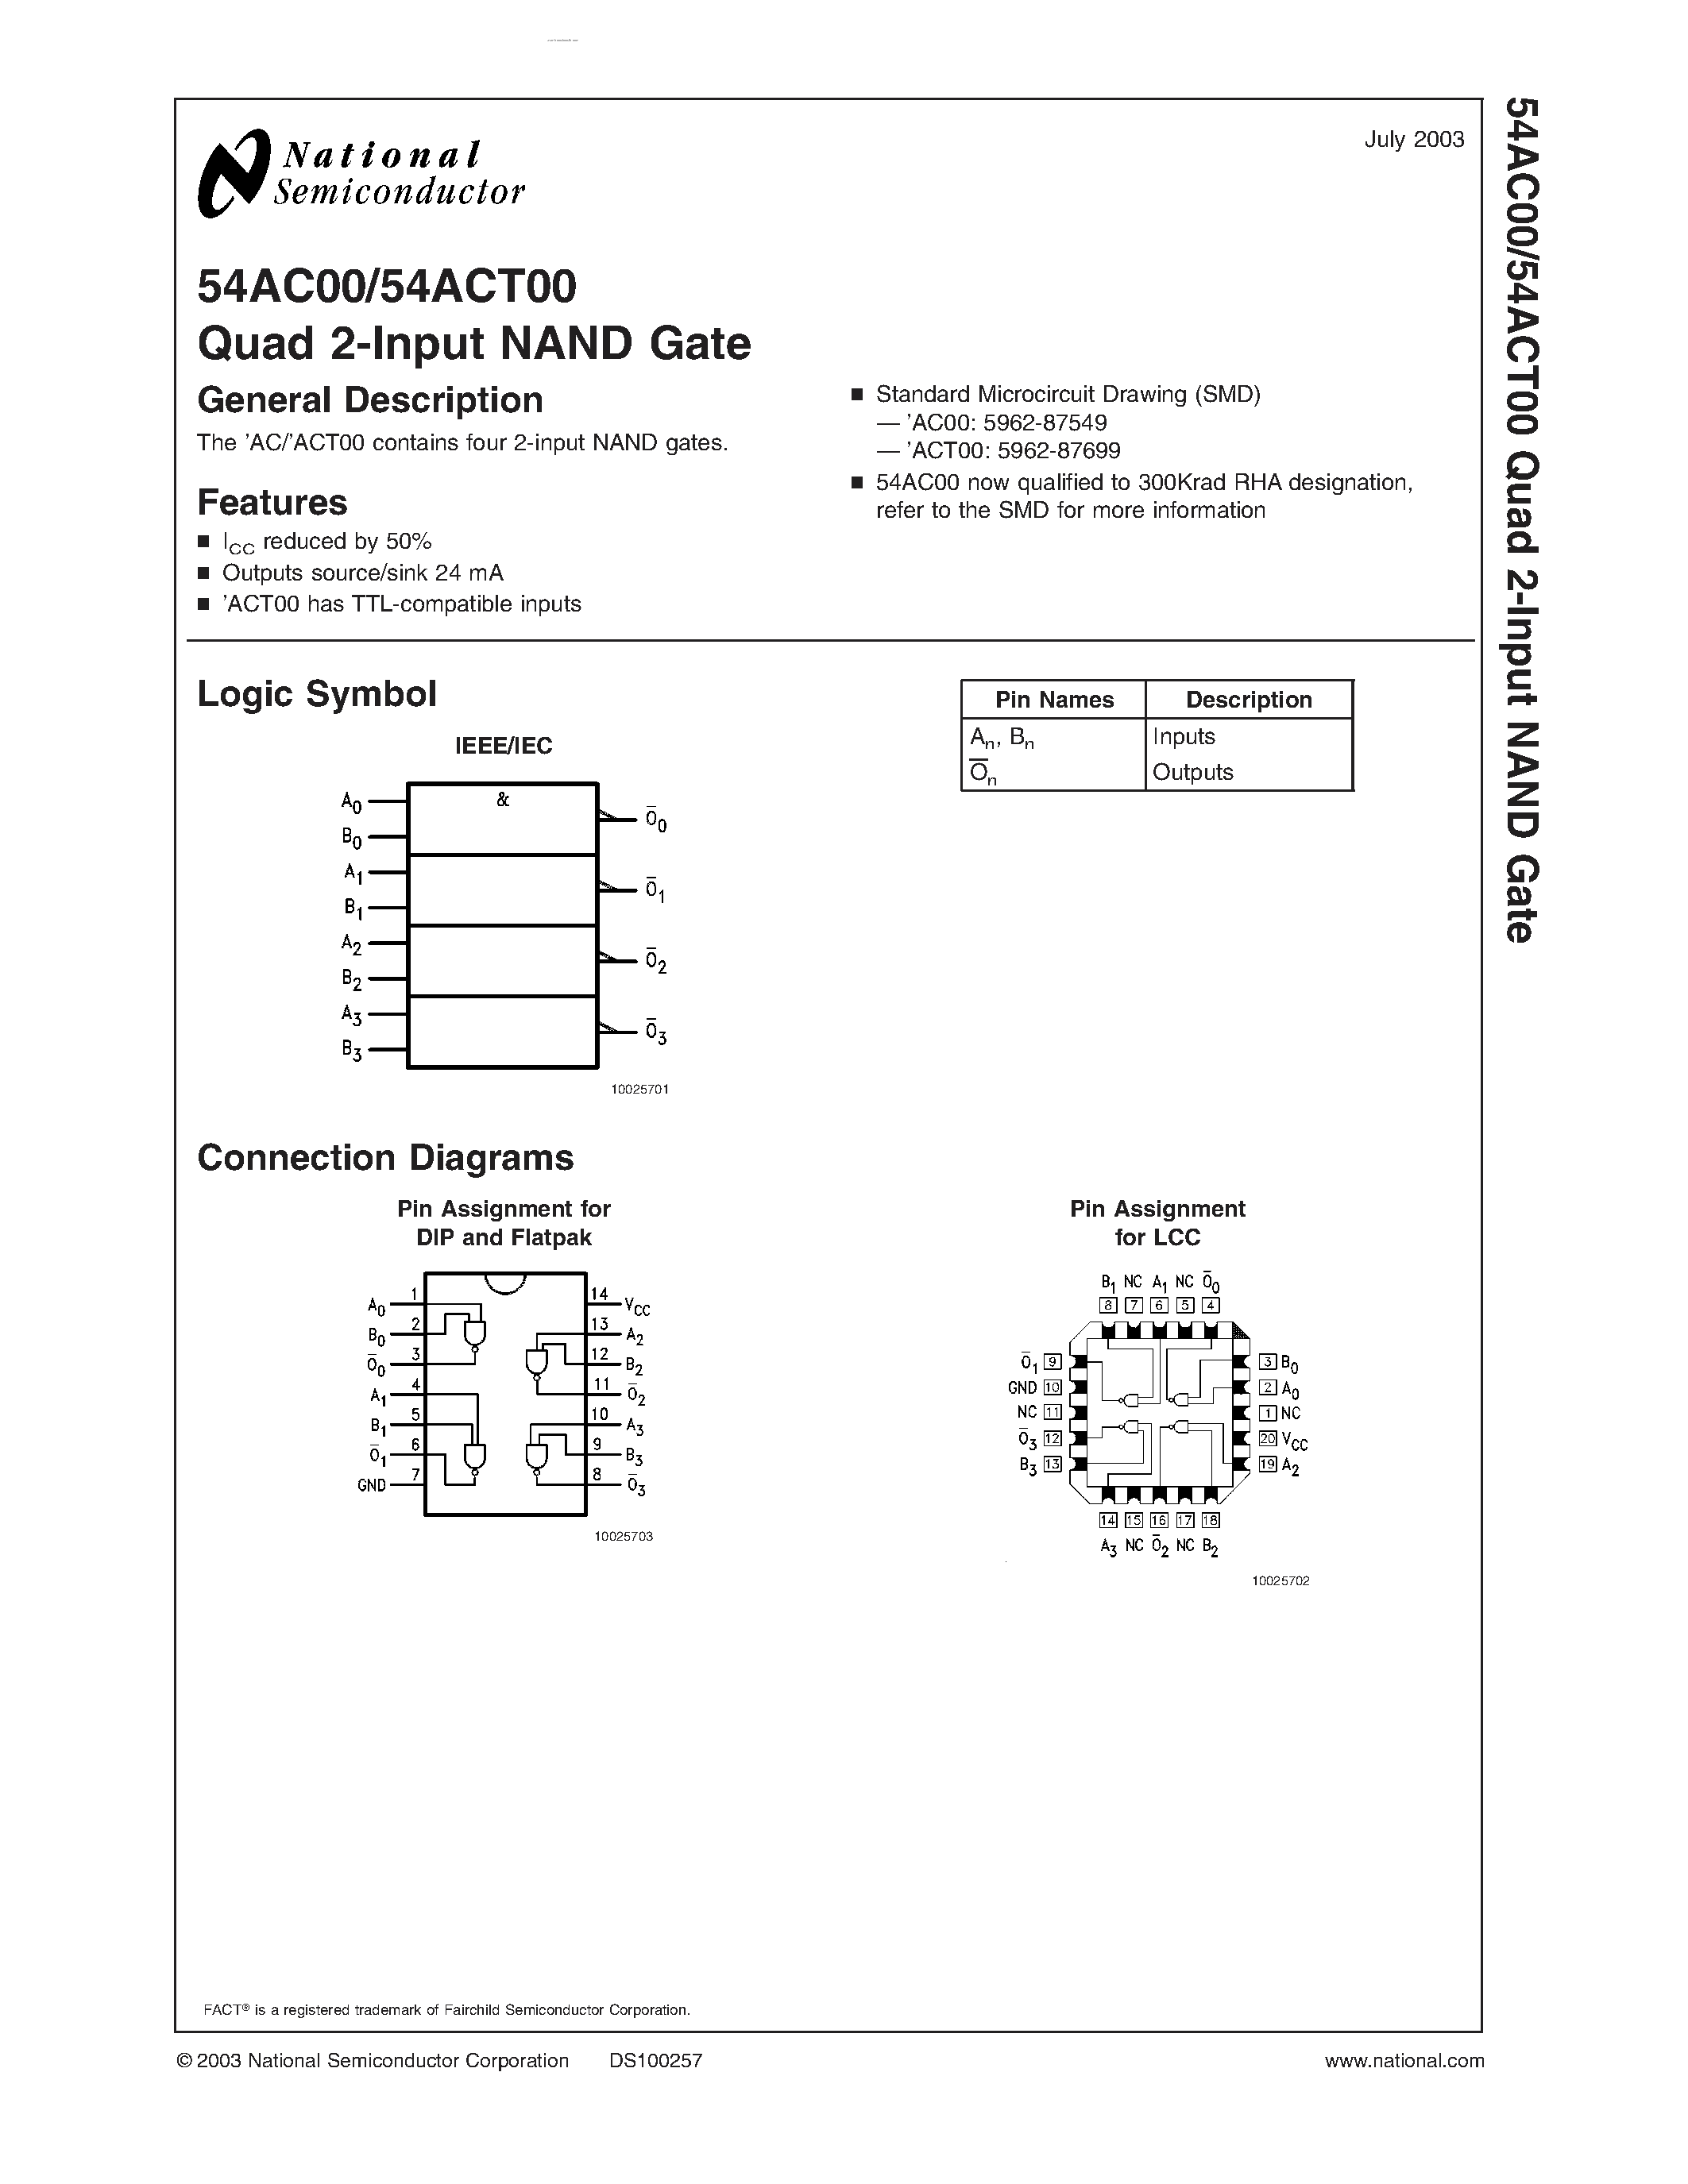 Datasheet 54AC00 - Quad 2-Input NAND Gate page 1